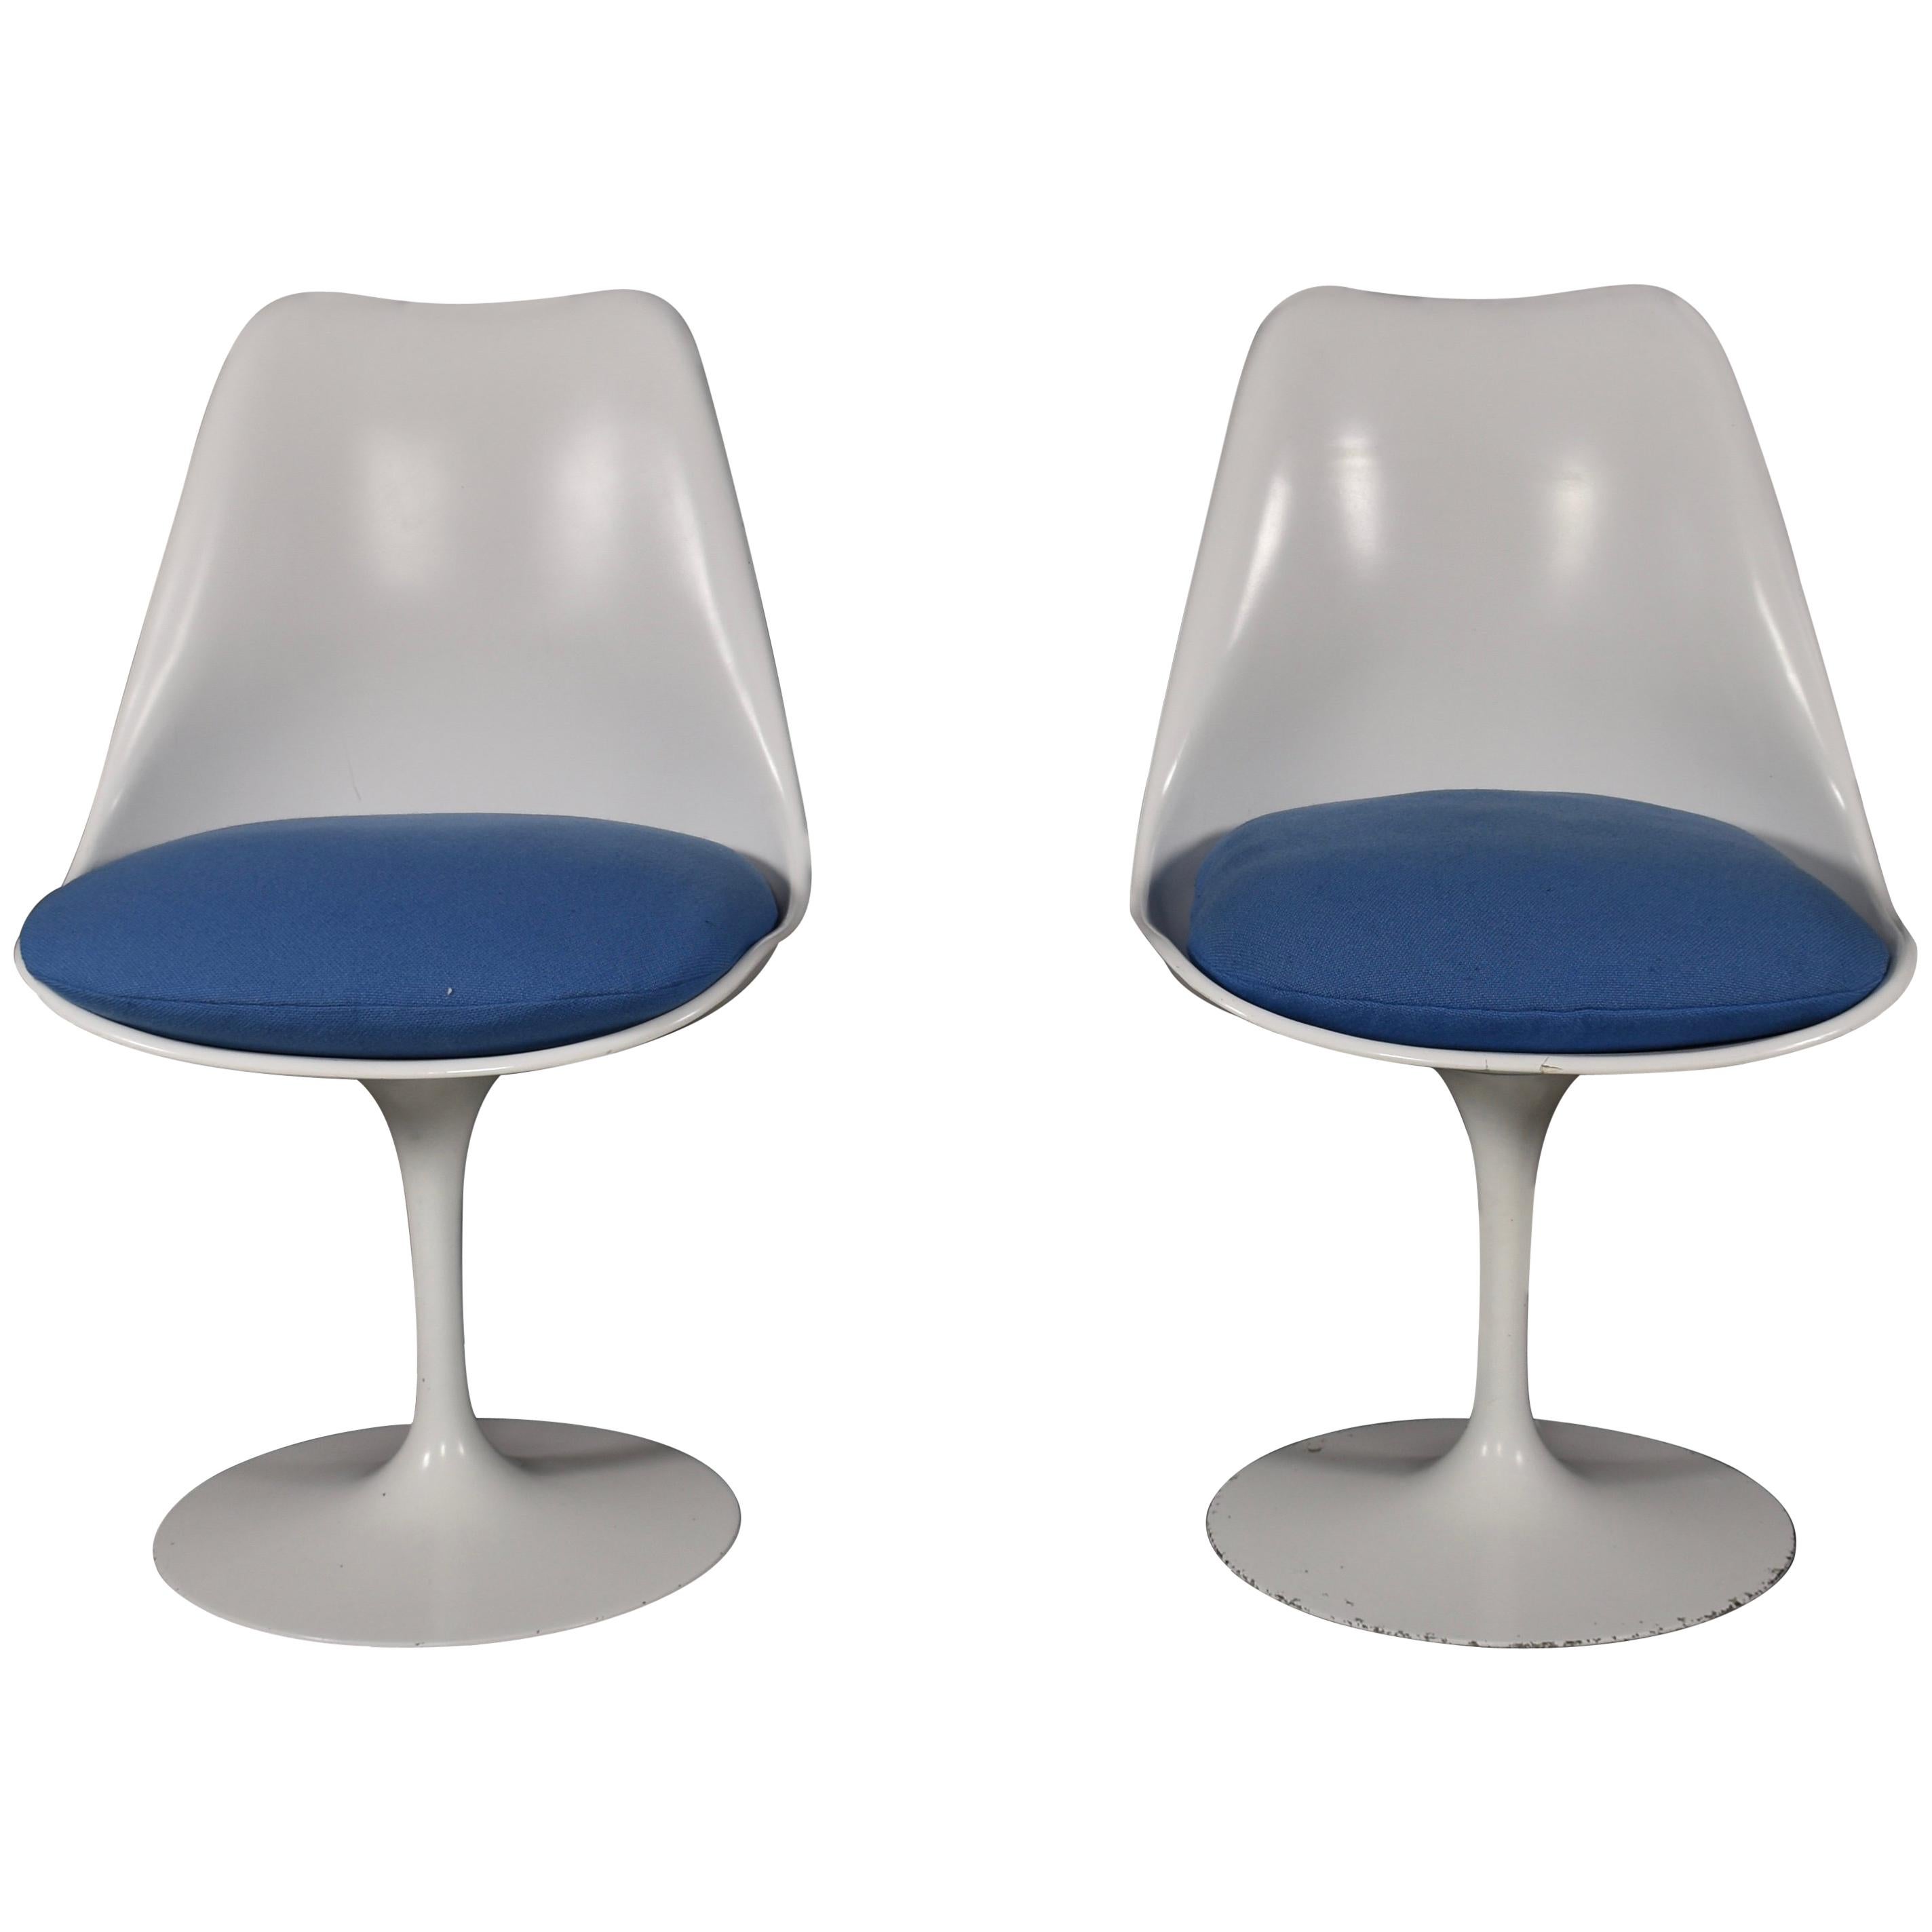 Pair of Eero Saarinen for Knoll Tulip Chairs, circa 1960